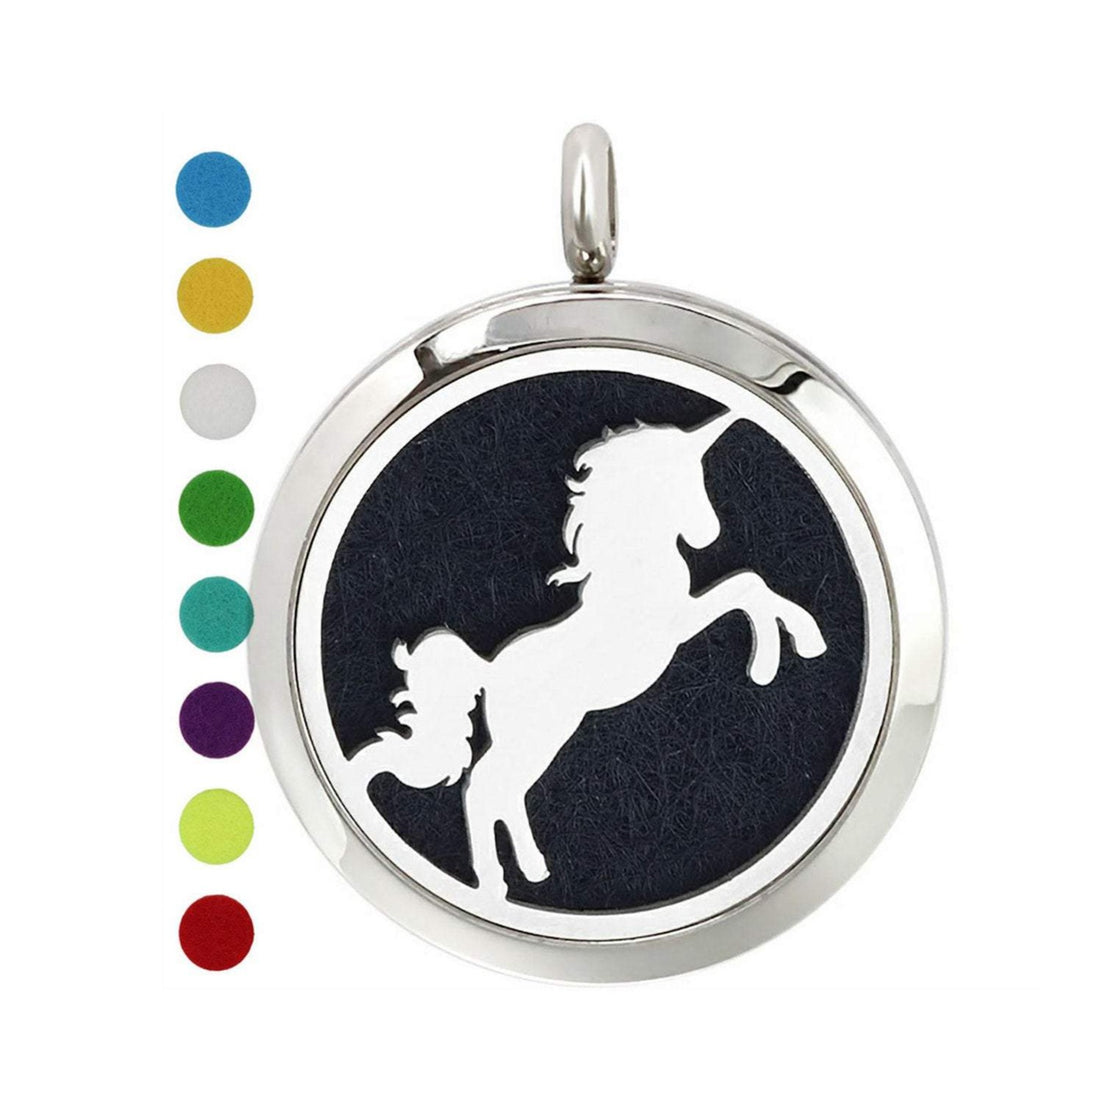 Unicorn diffuser necklace pendant, unicorn gift, diy aromatherapy locket jewelry